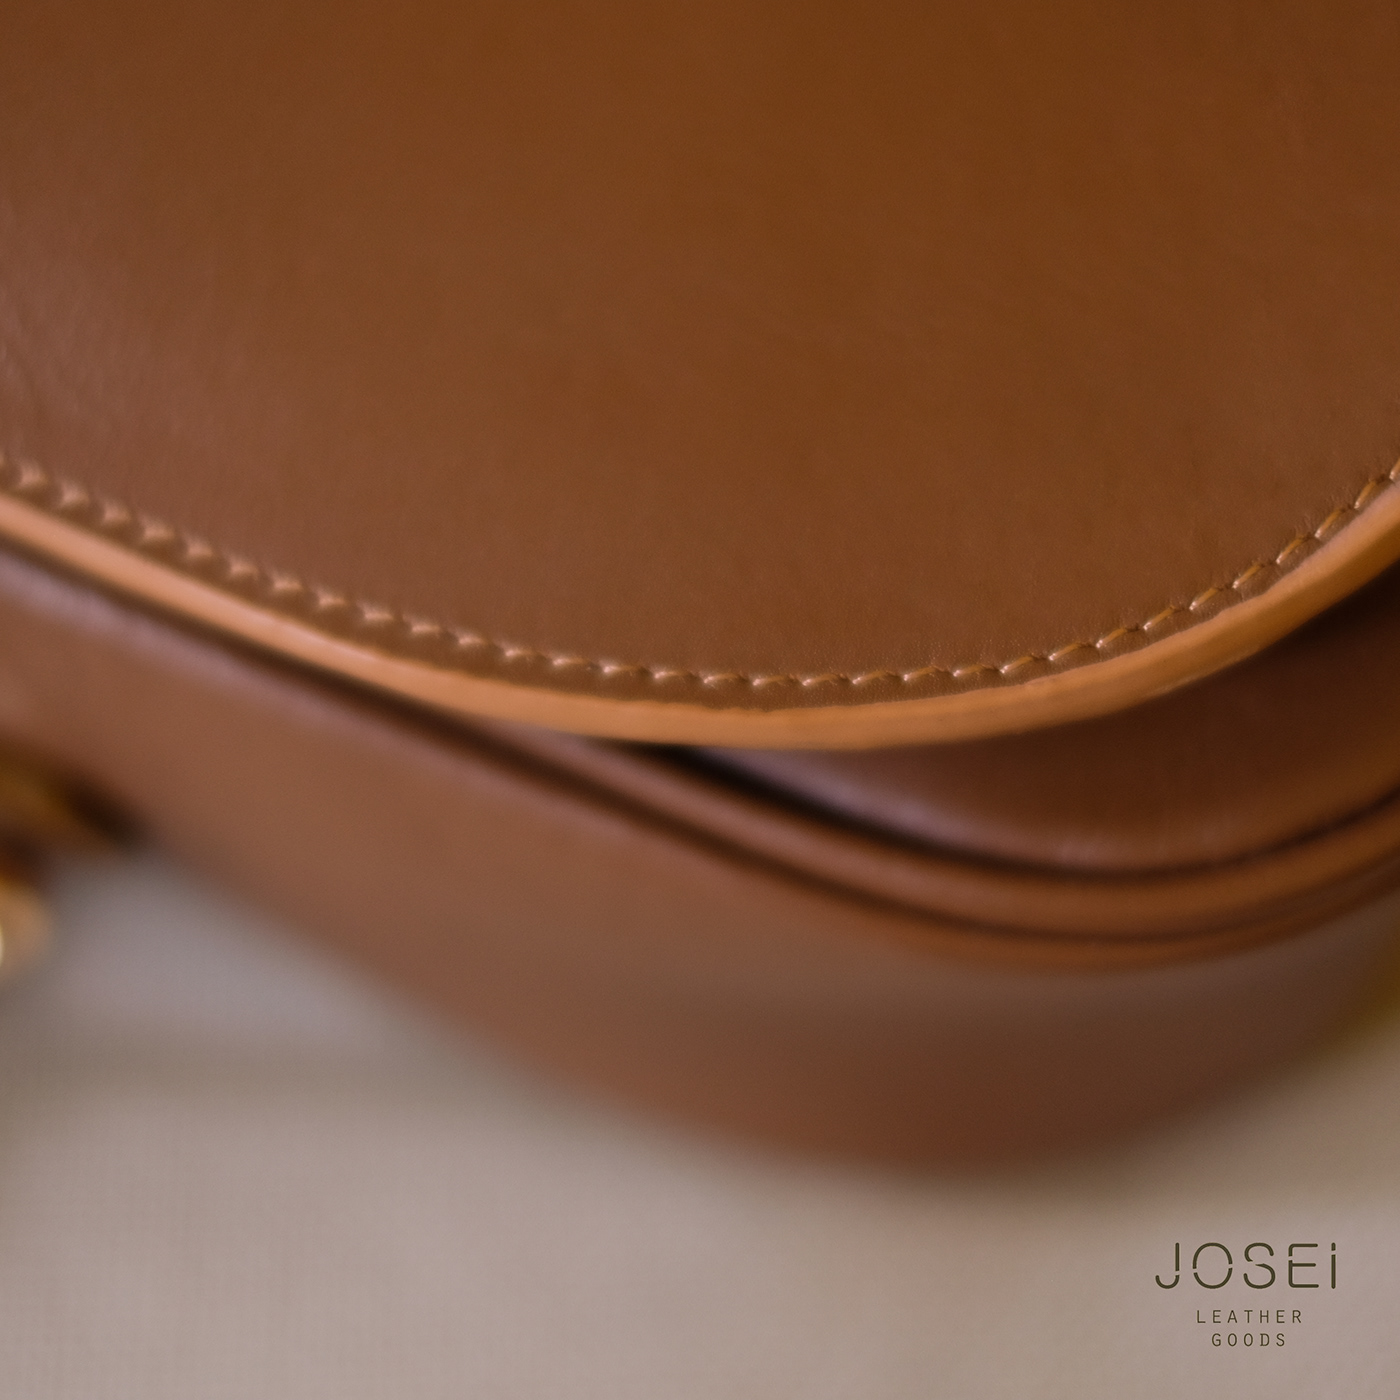 Fashion  josei josei leather goods leather Leather Craft leather goods Product Shoot